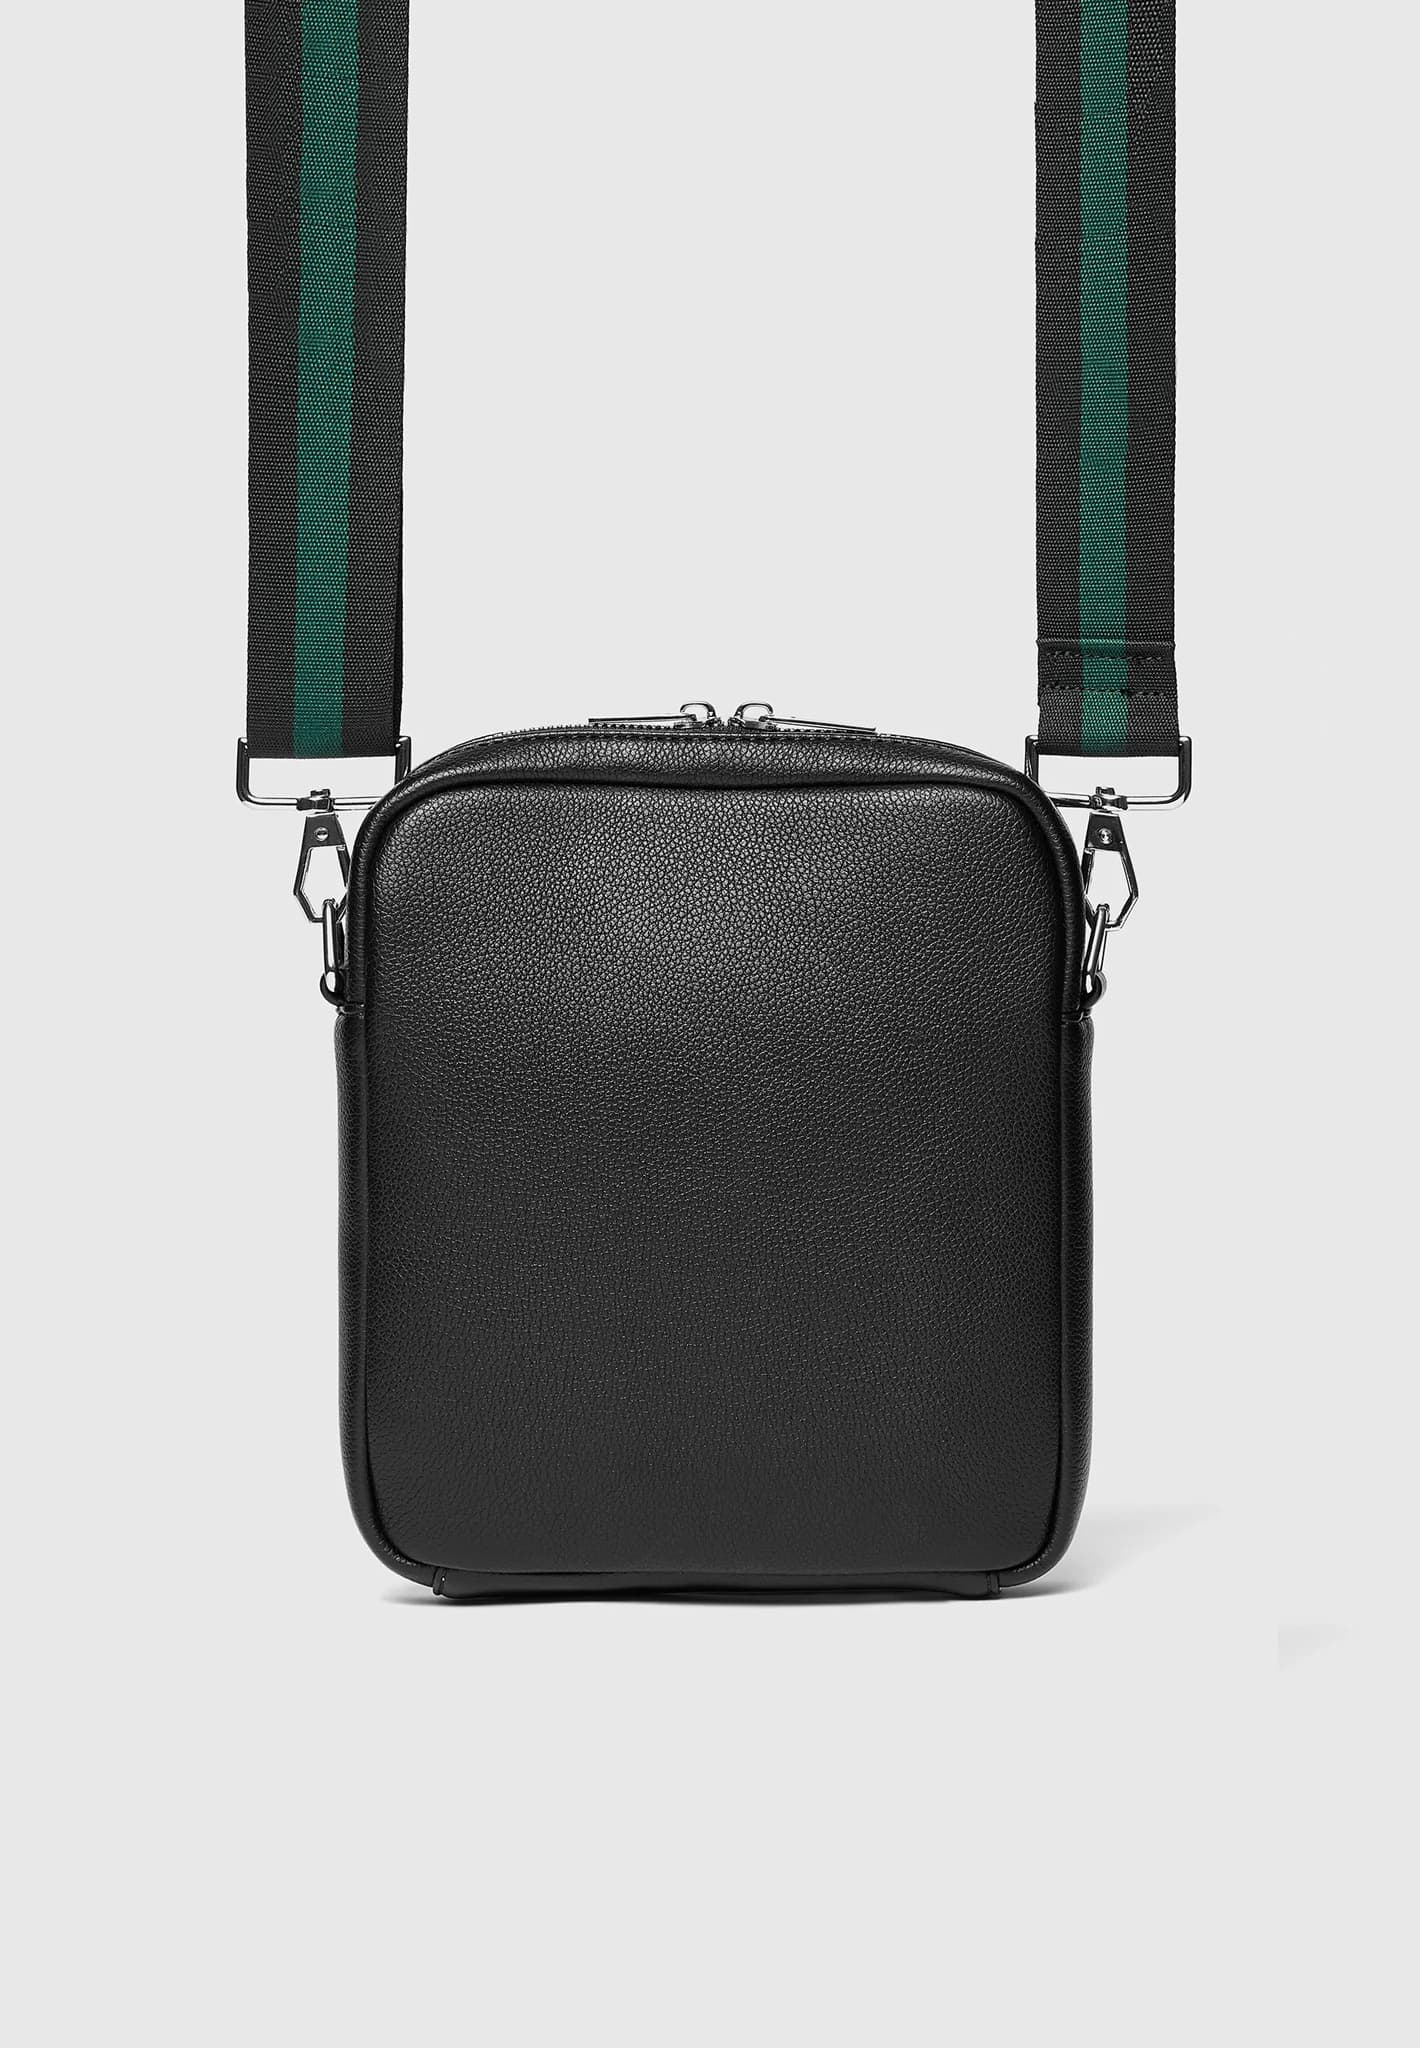 Black Cross-Body Bag With Signature Stripe Panel